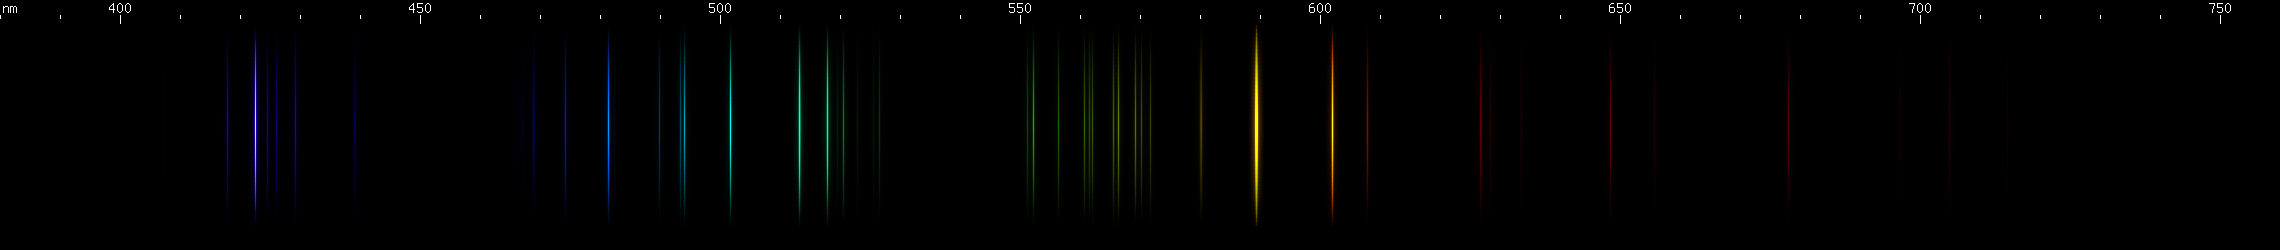 Spectral Lines of Germanium